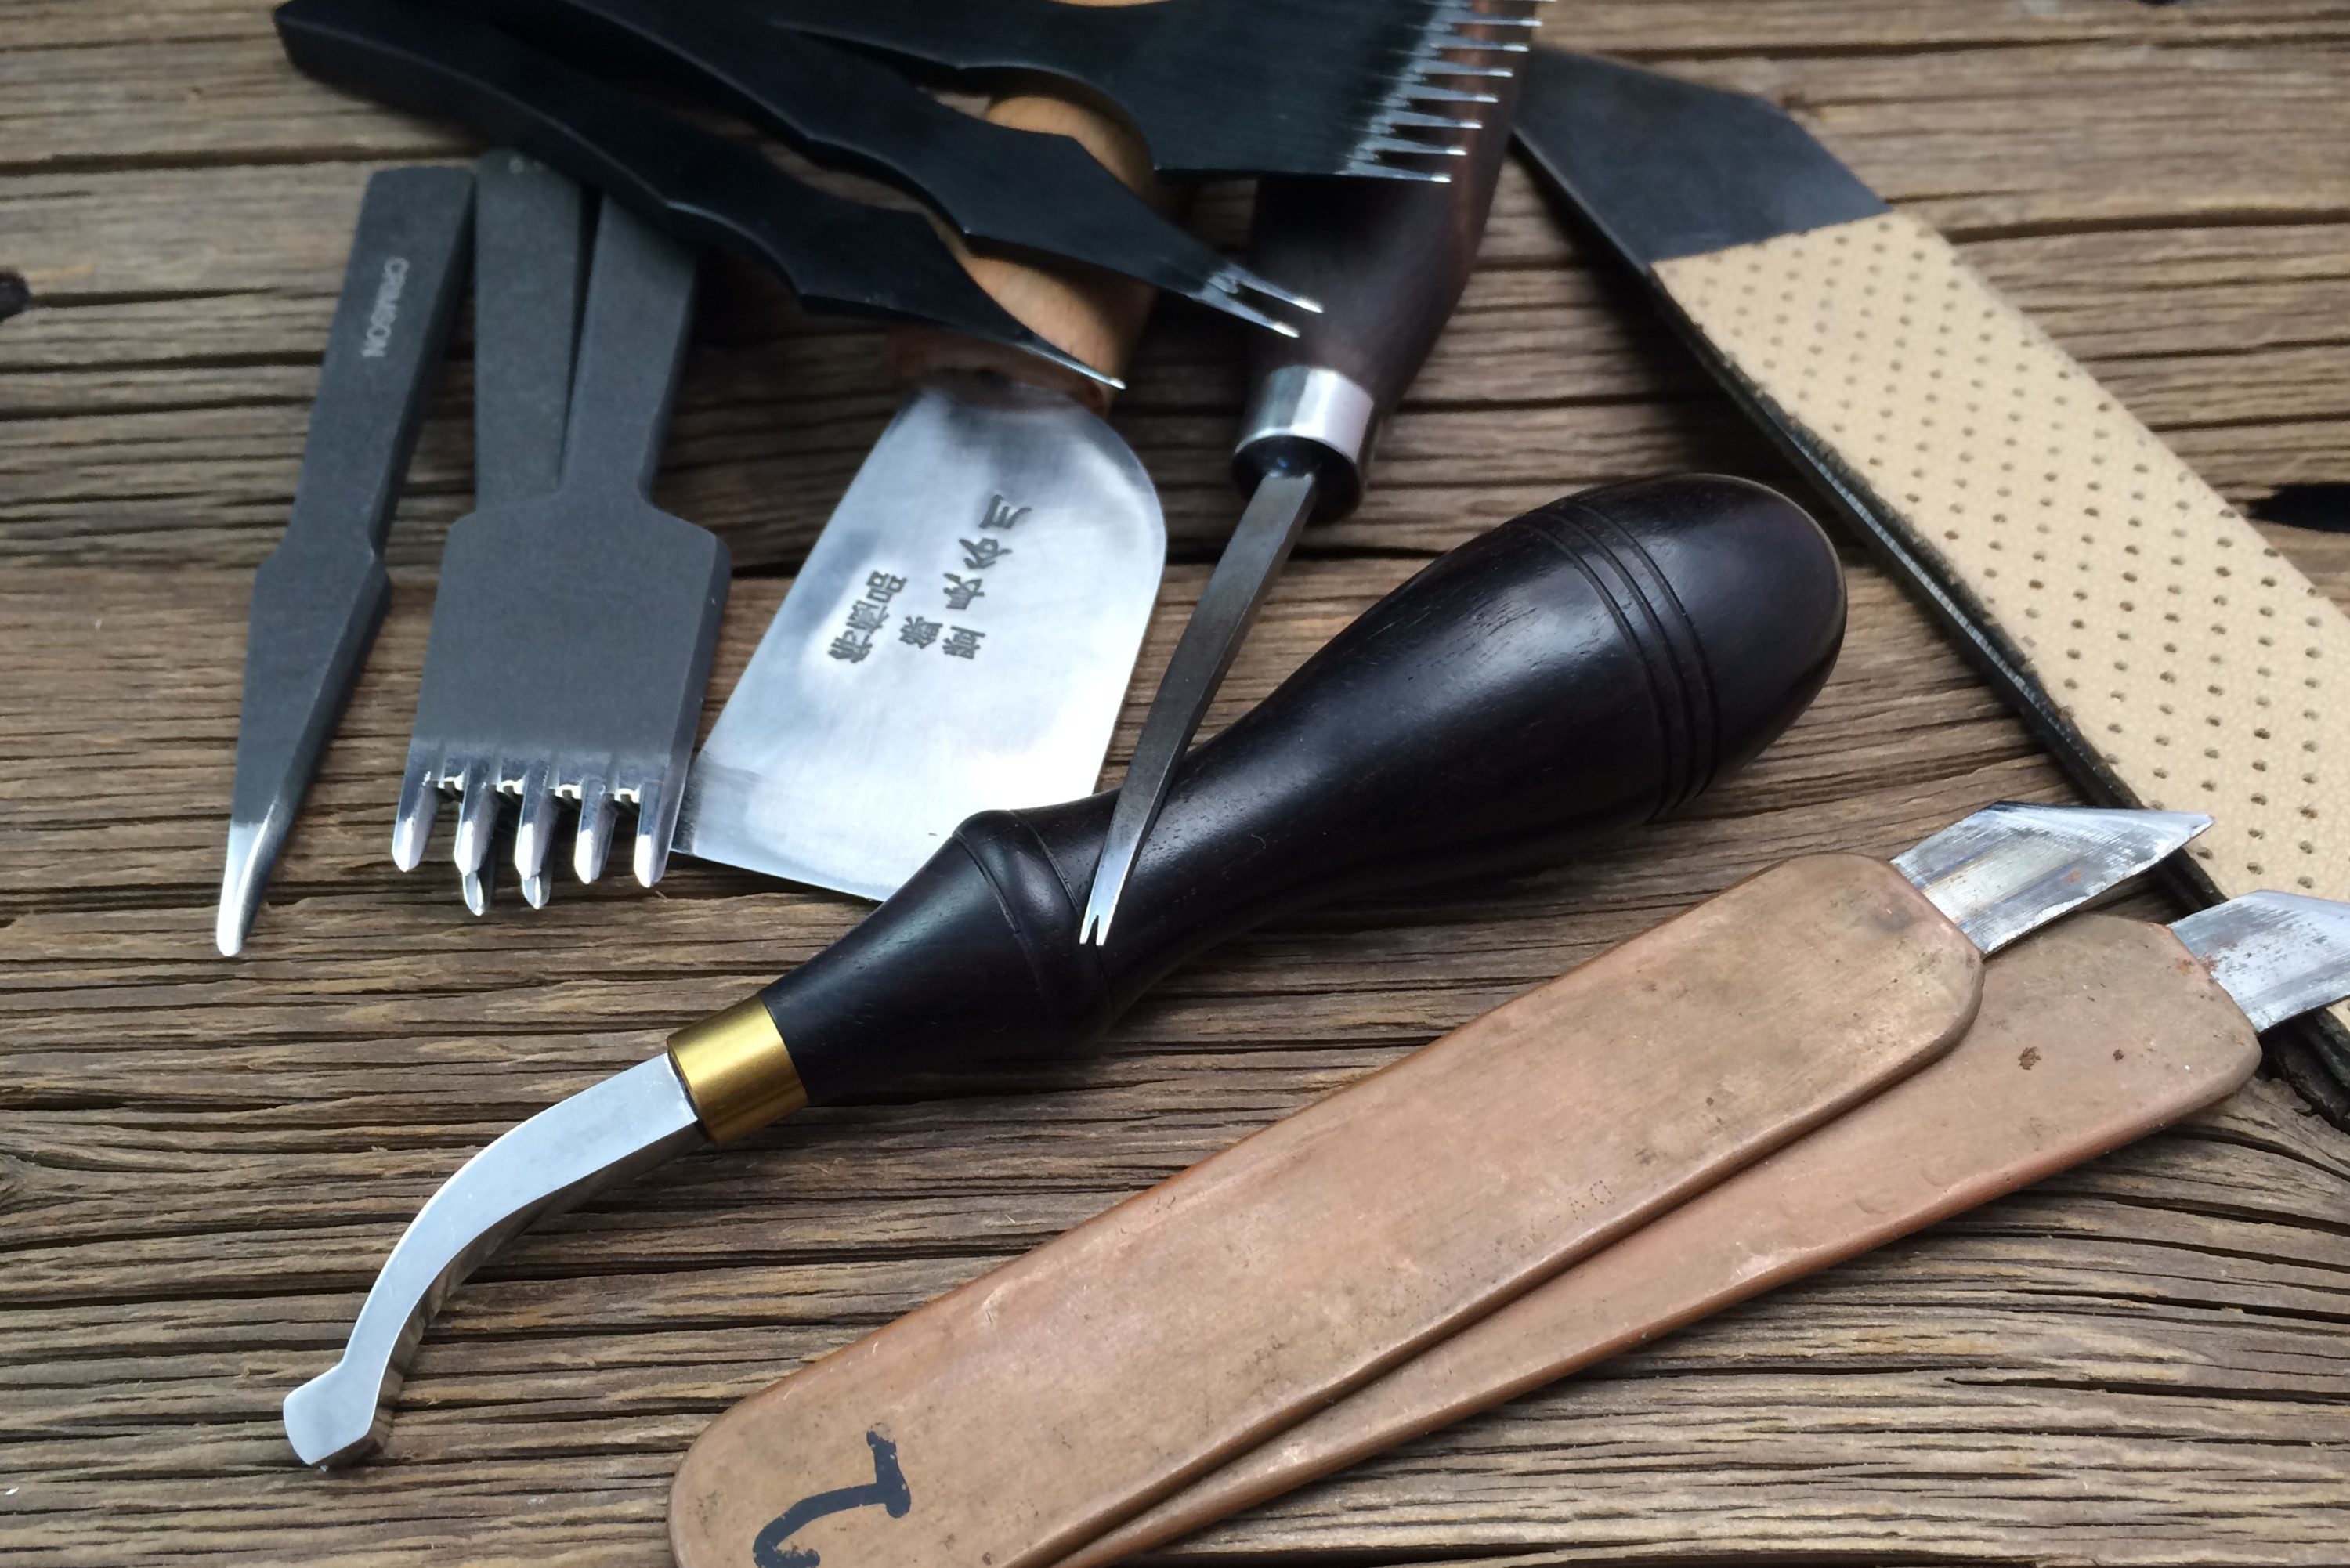 Handmade leather strap tools